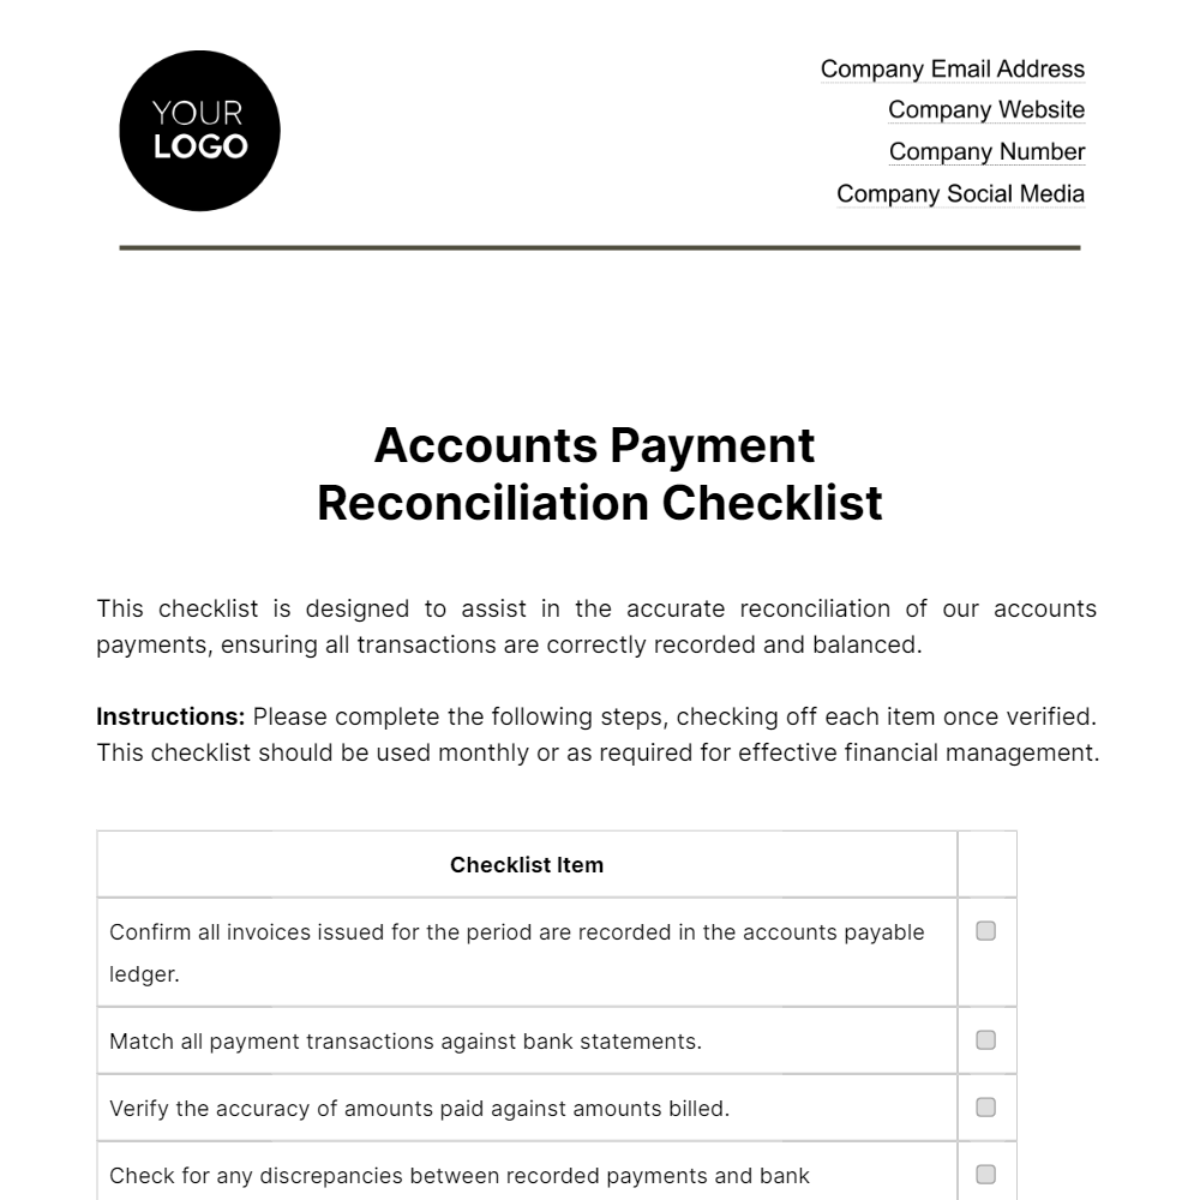 Accounts Payment Reconciliation Checklist Template